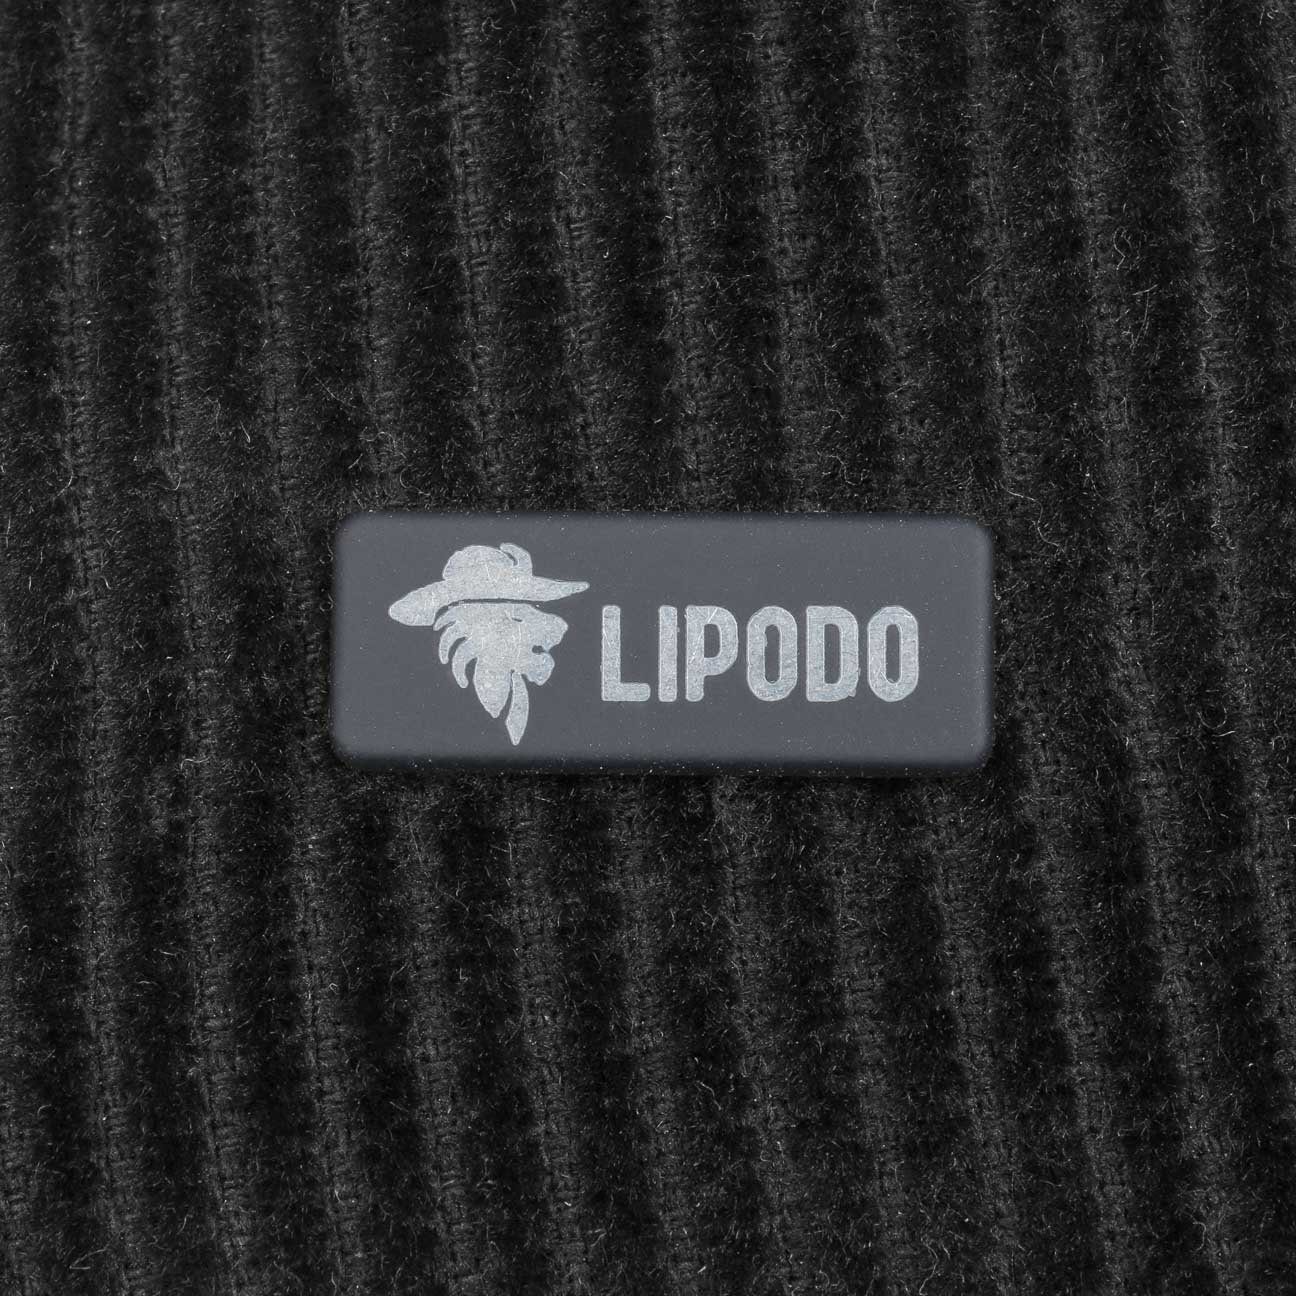 Lipodo Flat Cap (1-St) schwarz mit Cordcap Schirm, in Italy Made